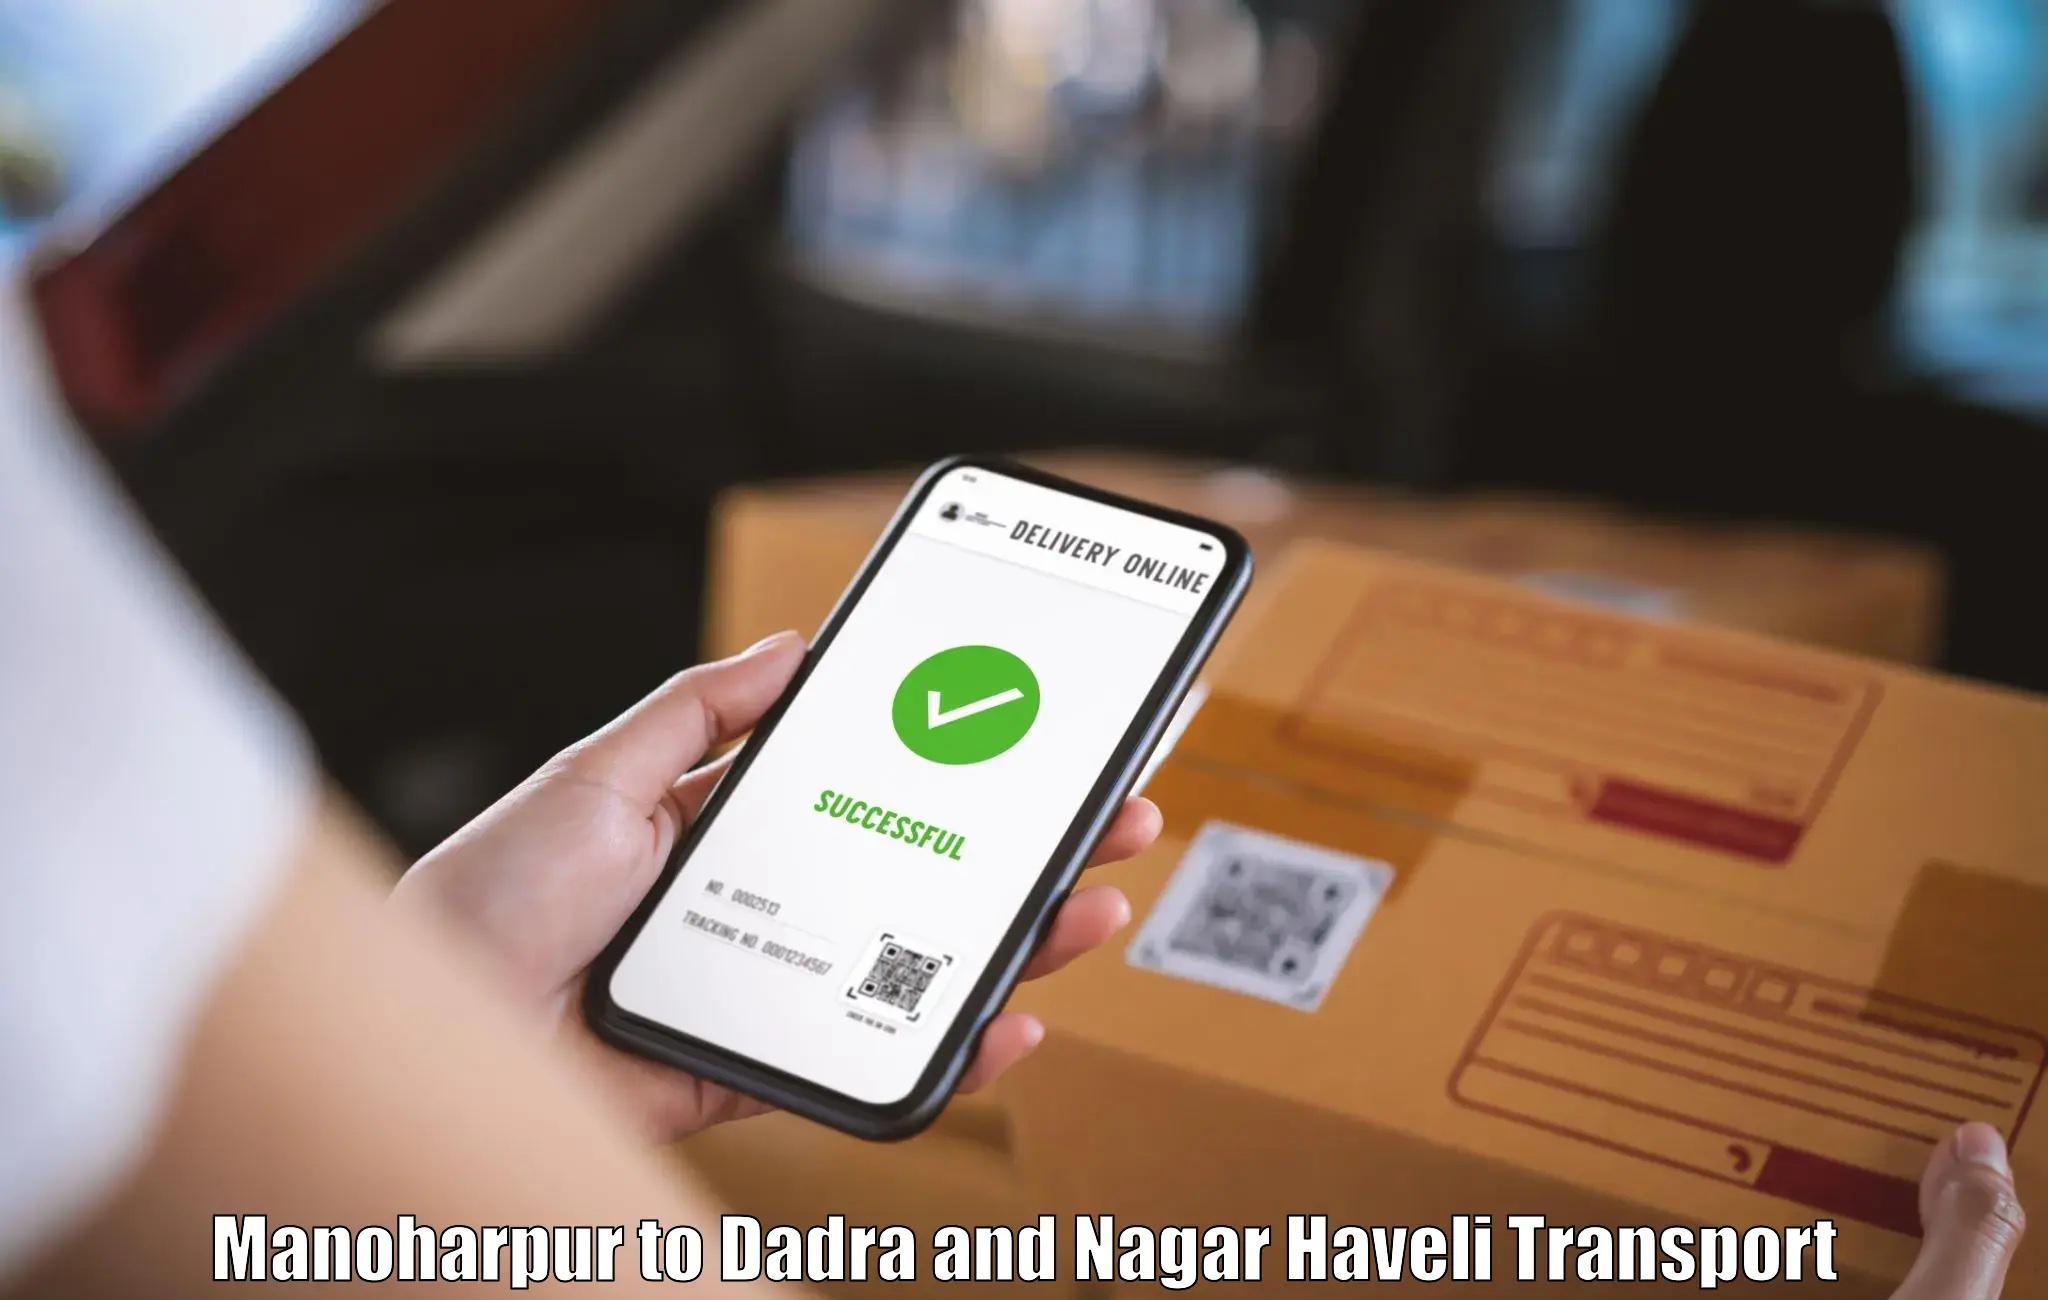 Shipping partner Manoharpur to Dadra and Nagar Haveli